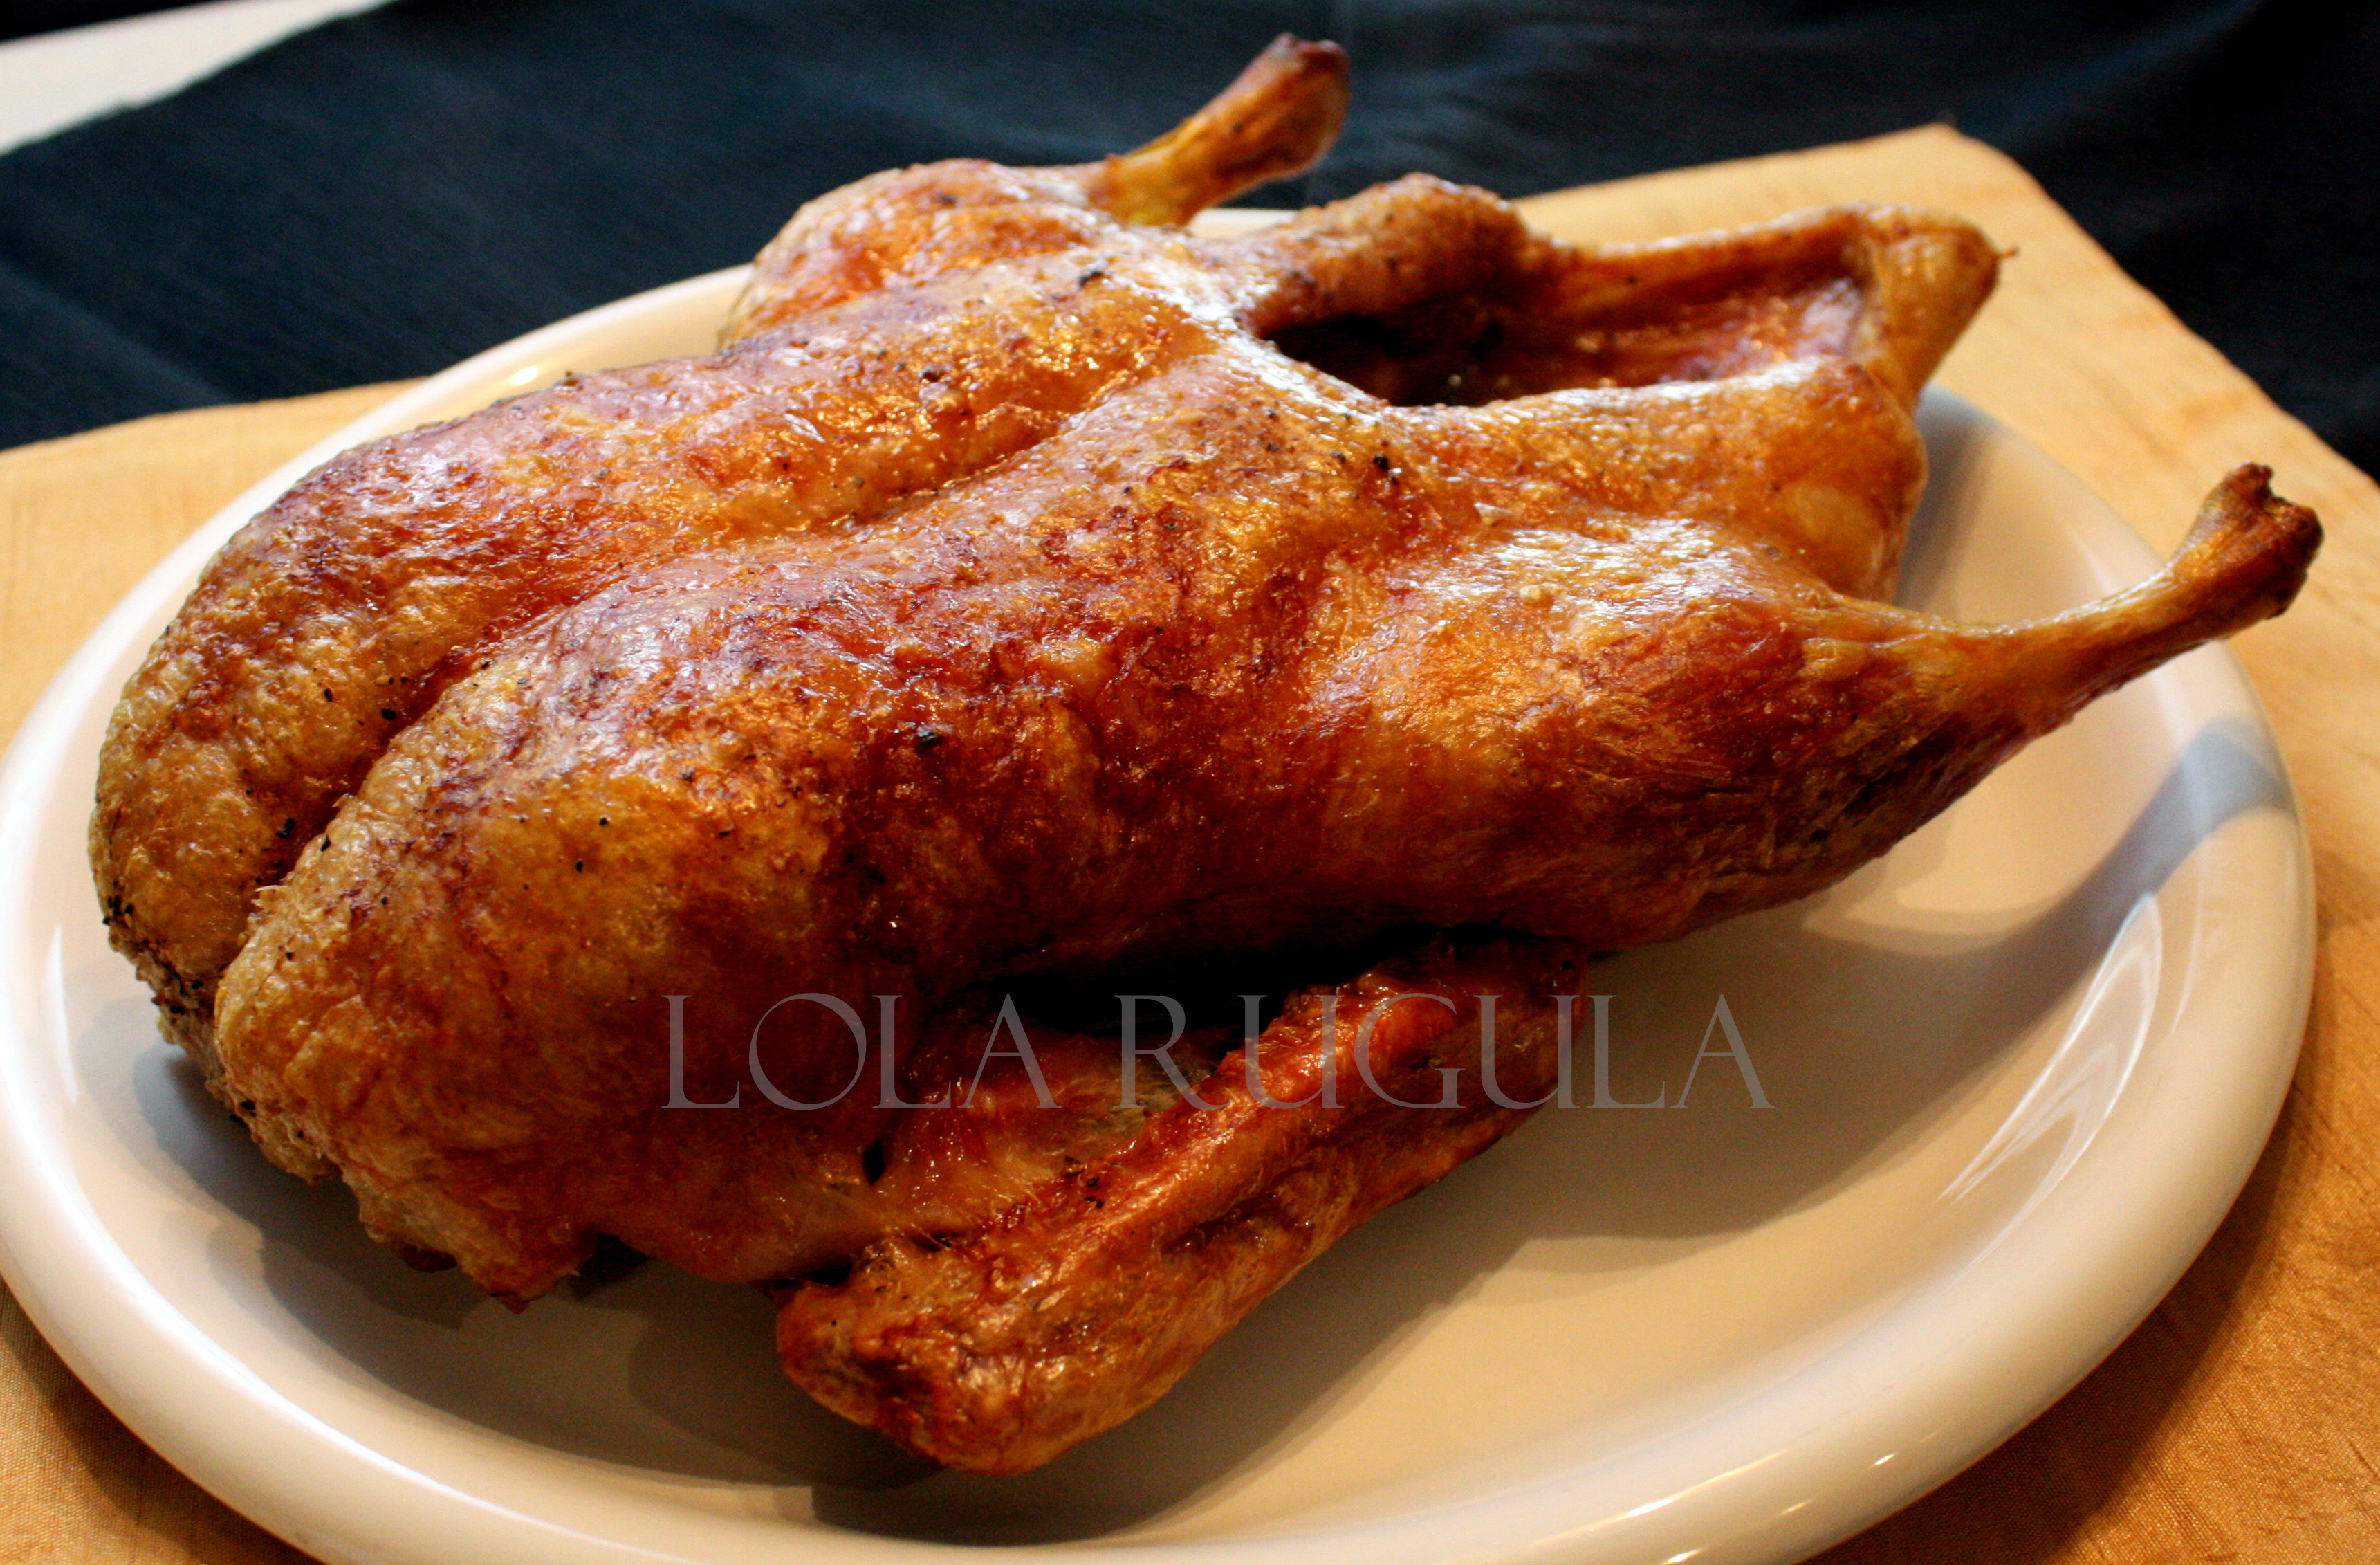 http://lolarugula.com/wp-content/uploads/2013/12/whole-roast-crispy-duck-recipe-lola-rugula.jpg?w=625